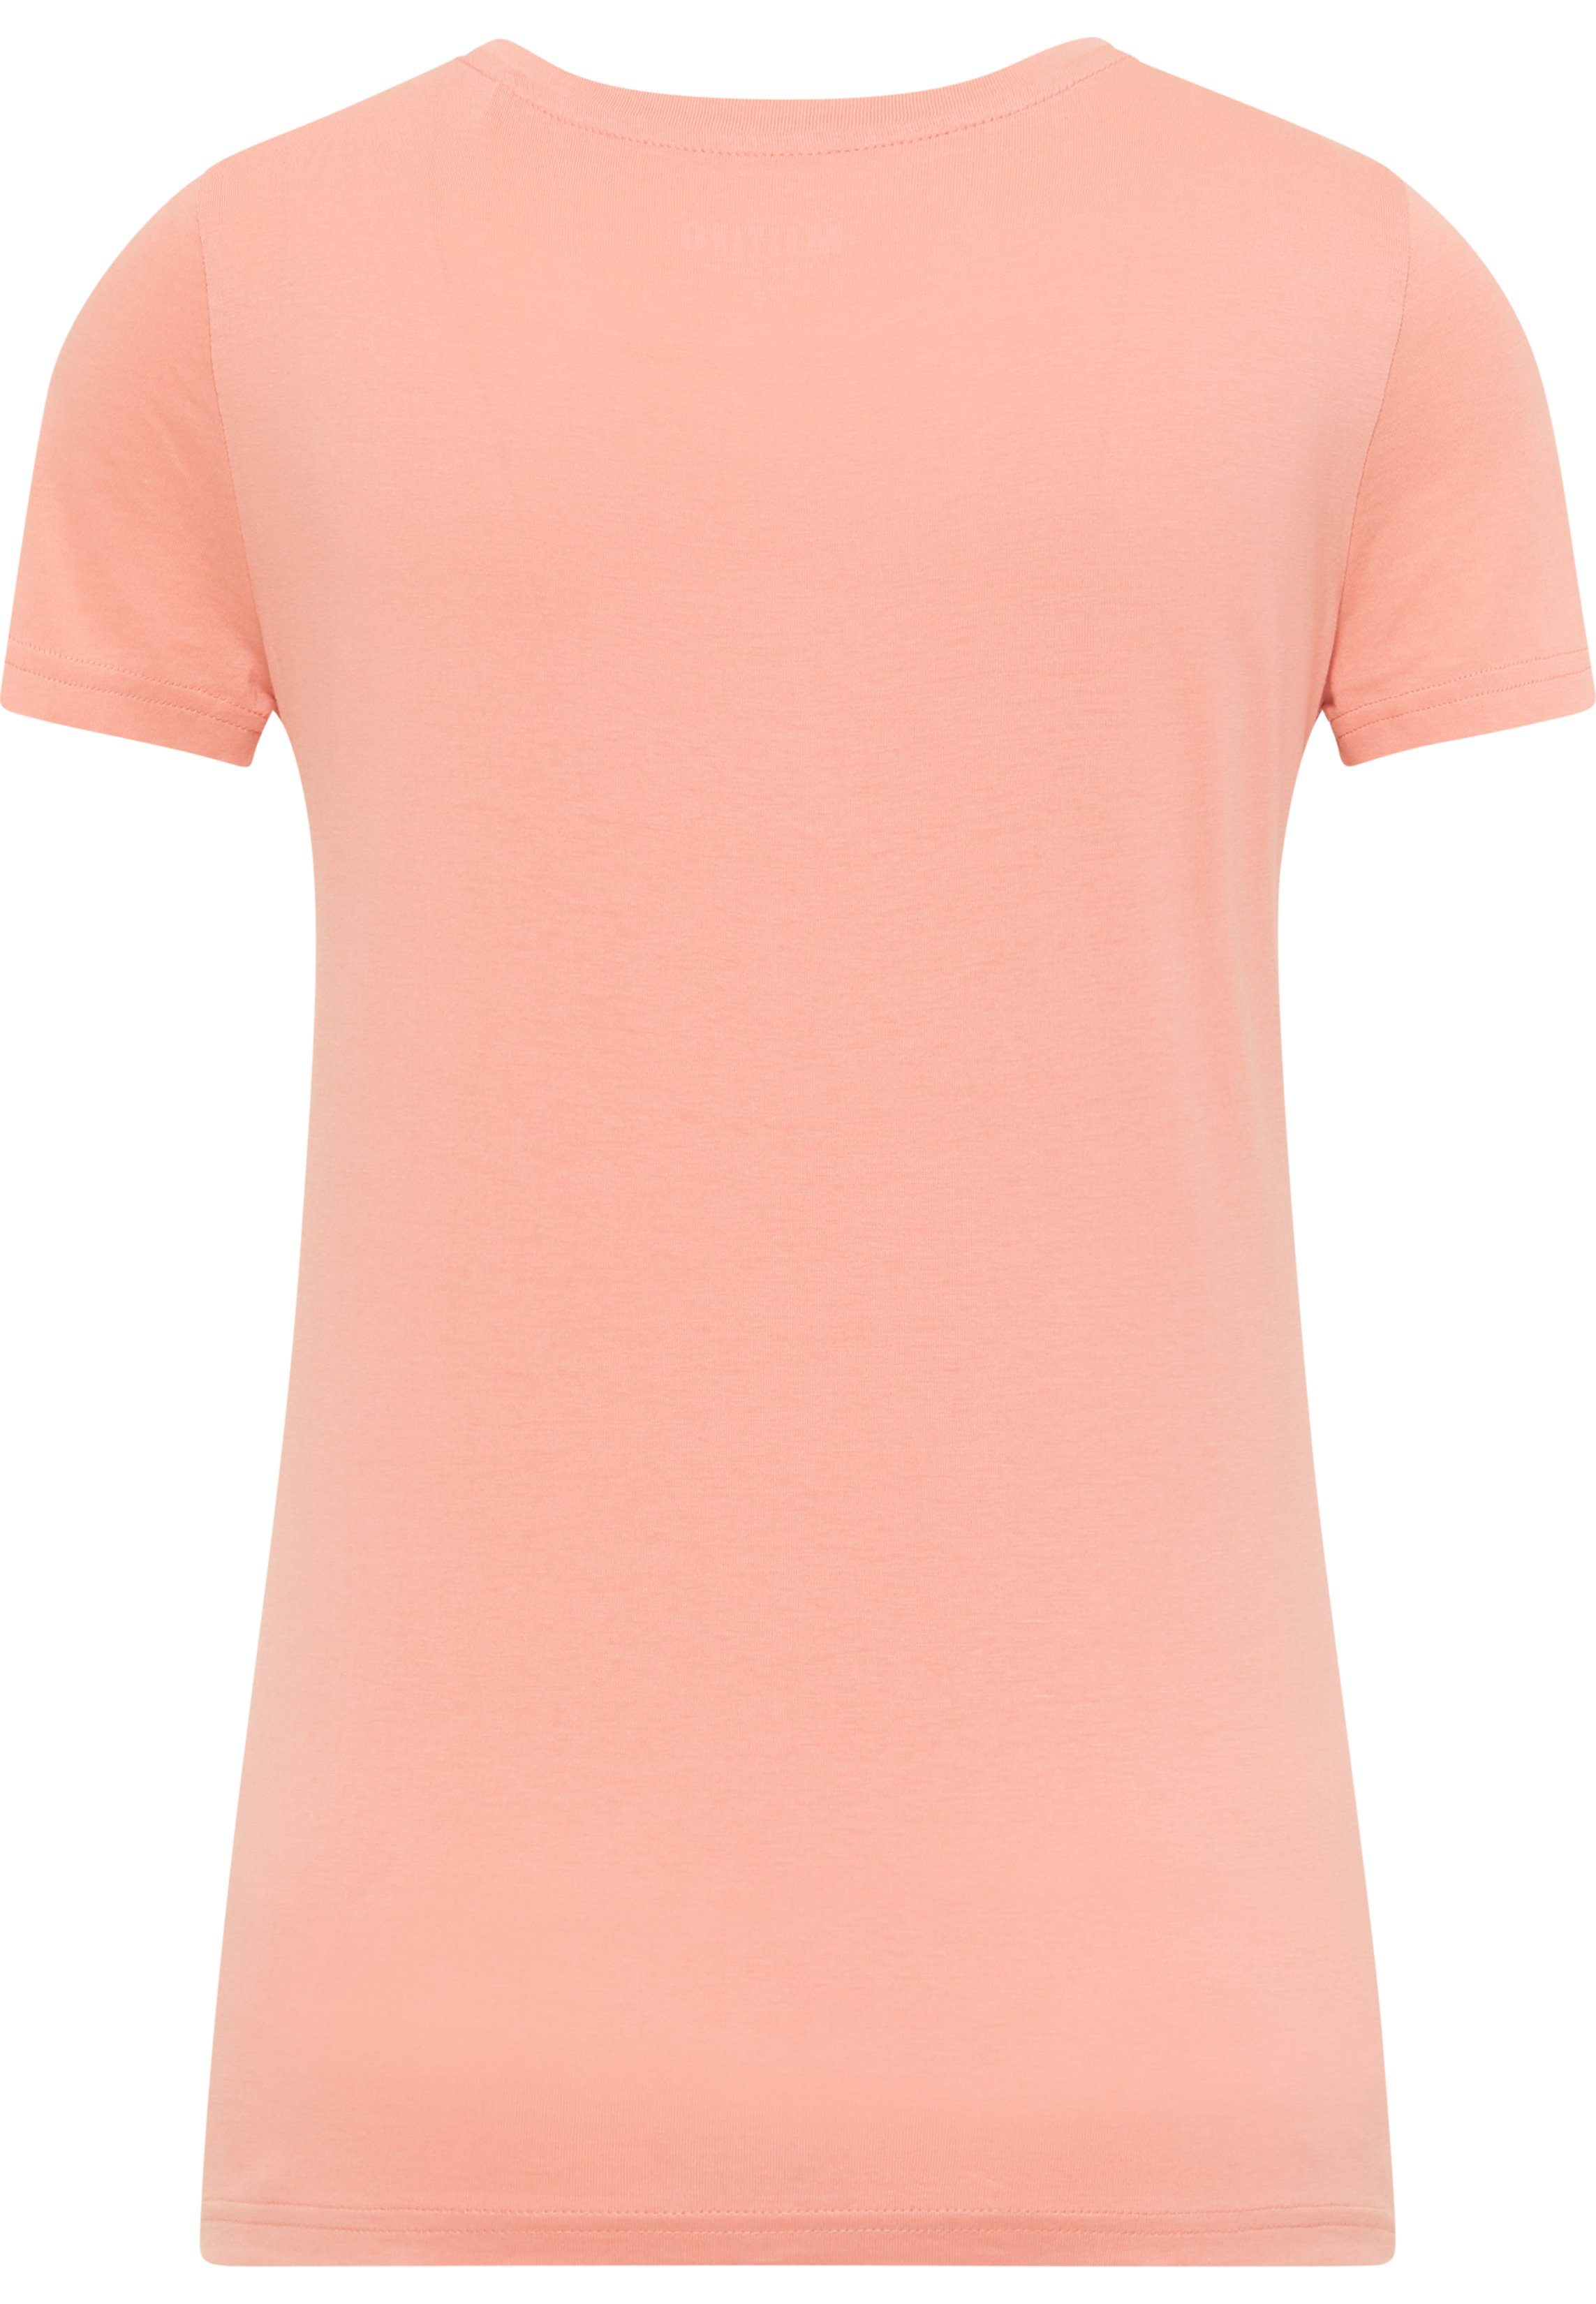 MUSTANG T-Shirt Alexia C pink Print